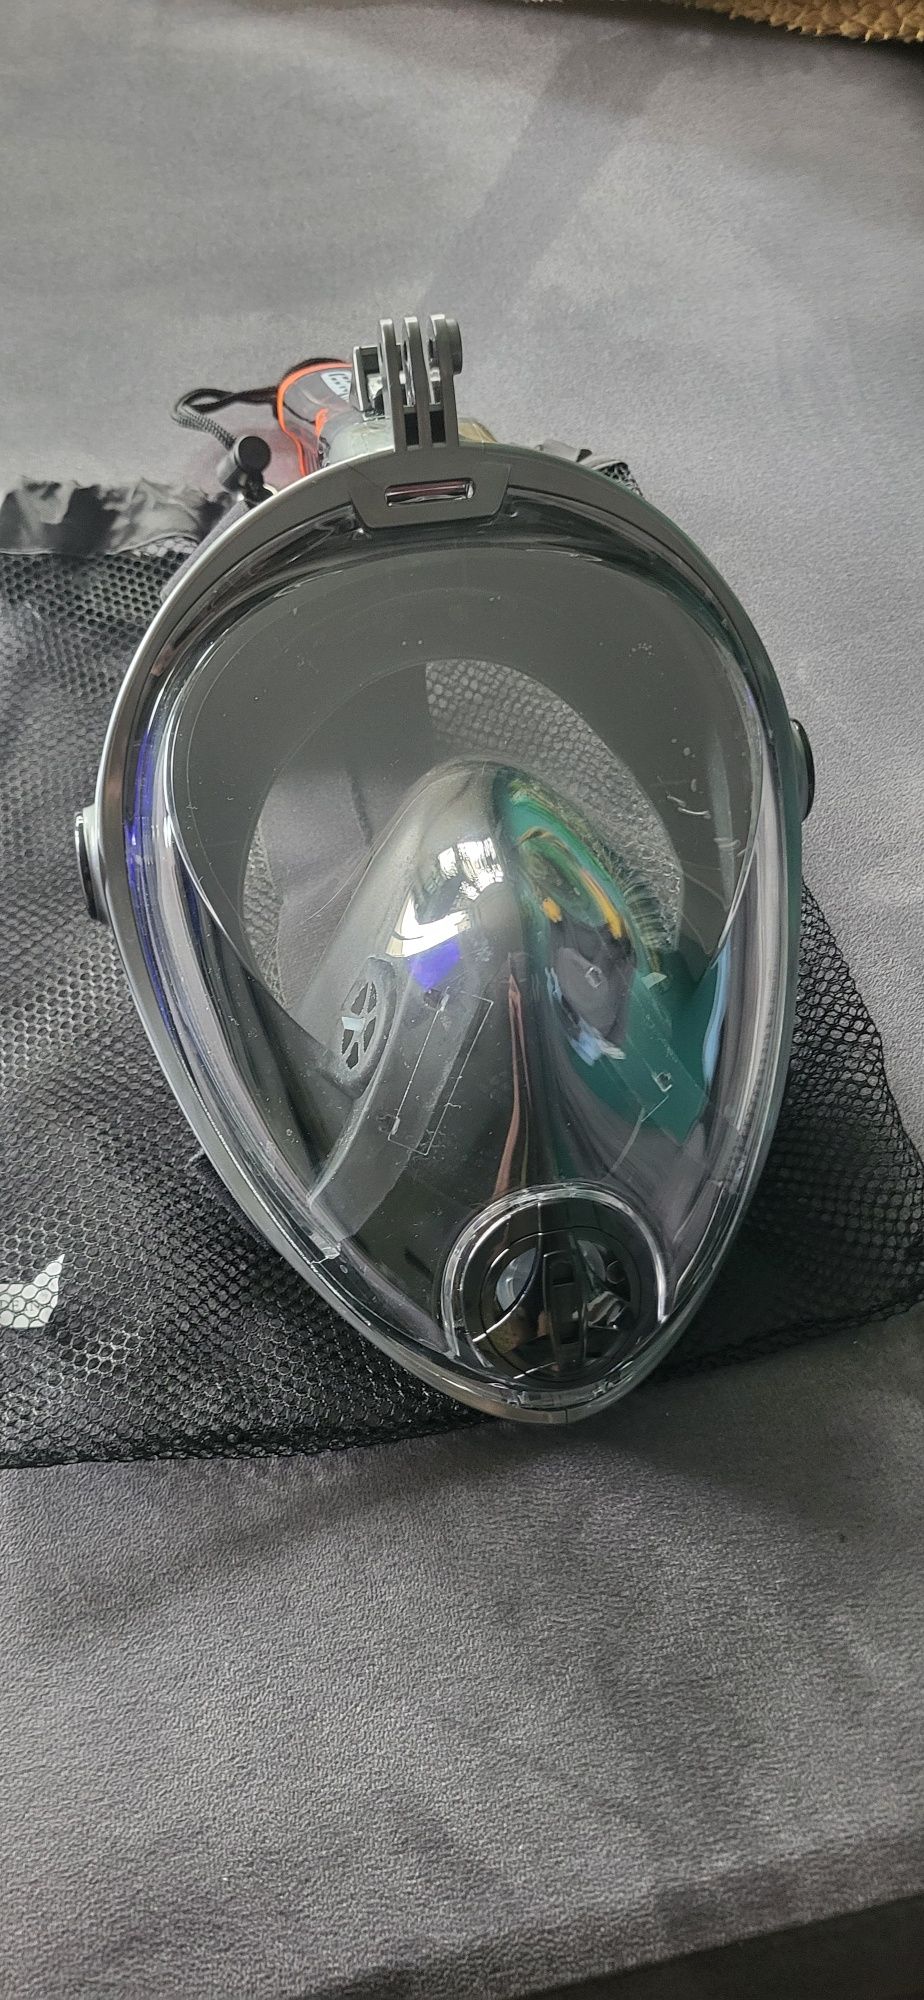 Maska do nurkowania pełnotwarzowa Aqua Speed Spectra 2.0 07 decathlon